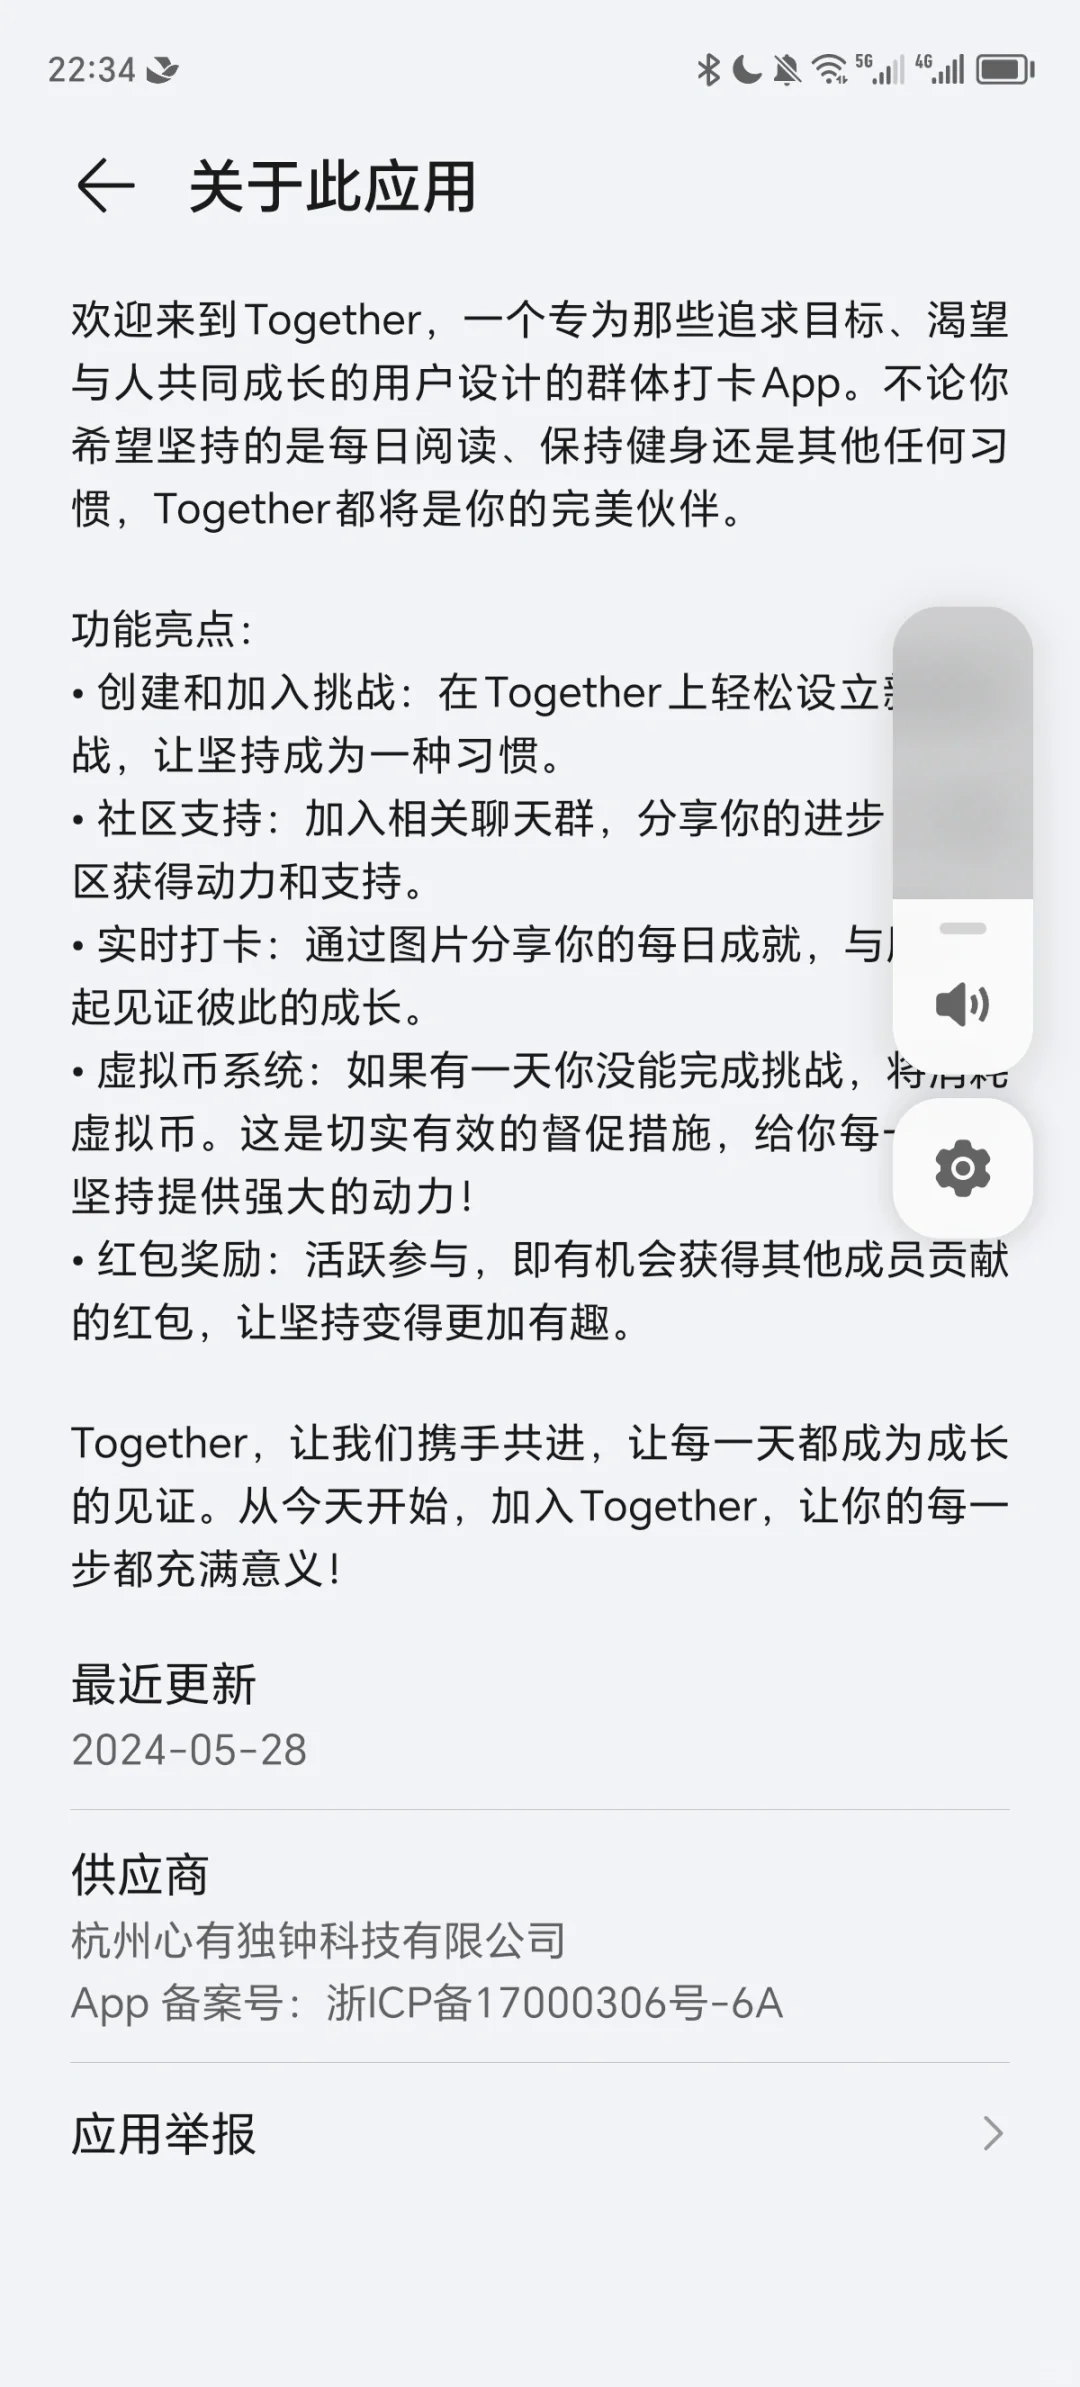 Together 安卓版成功上线 5 大应用商店